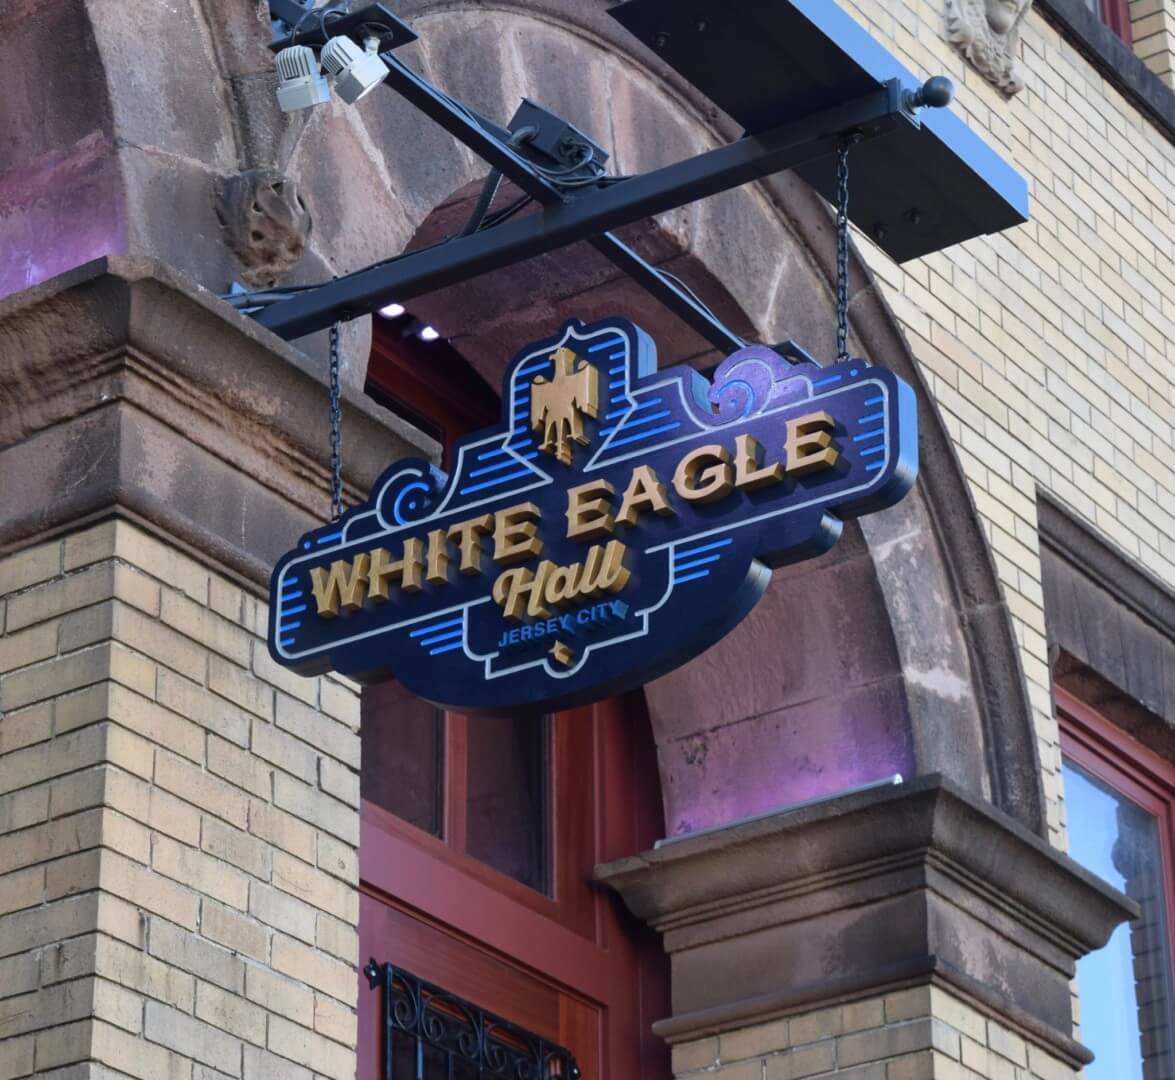 white eagle hall, jersey city